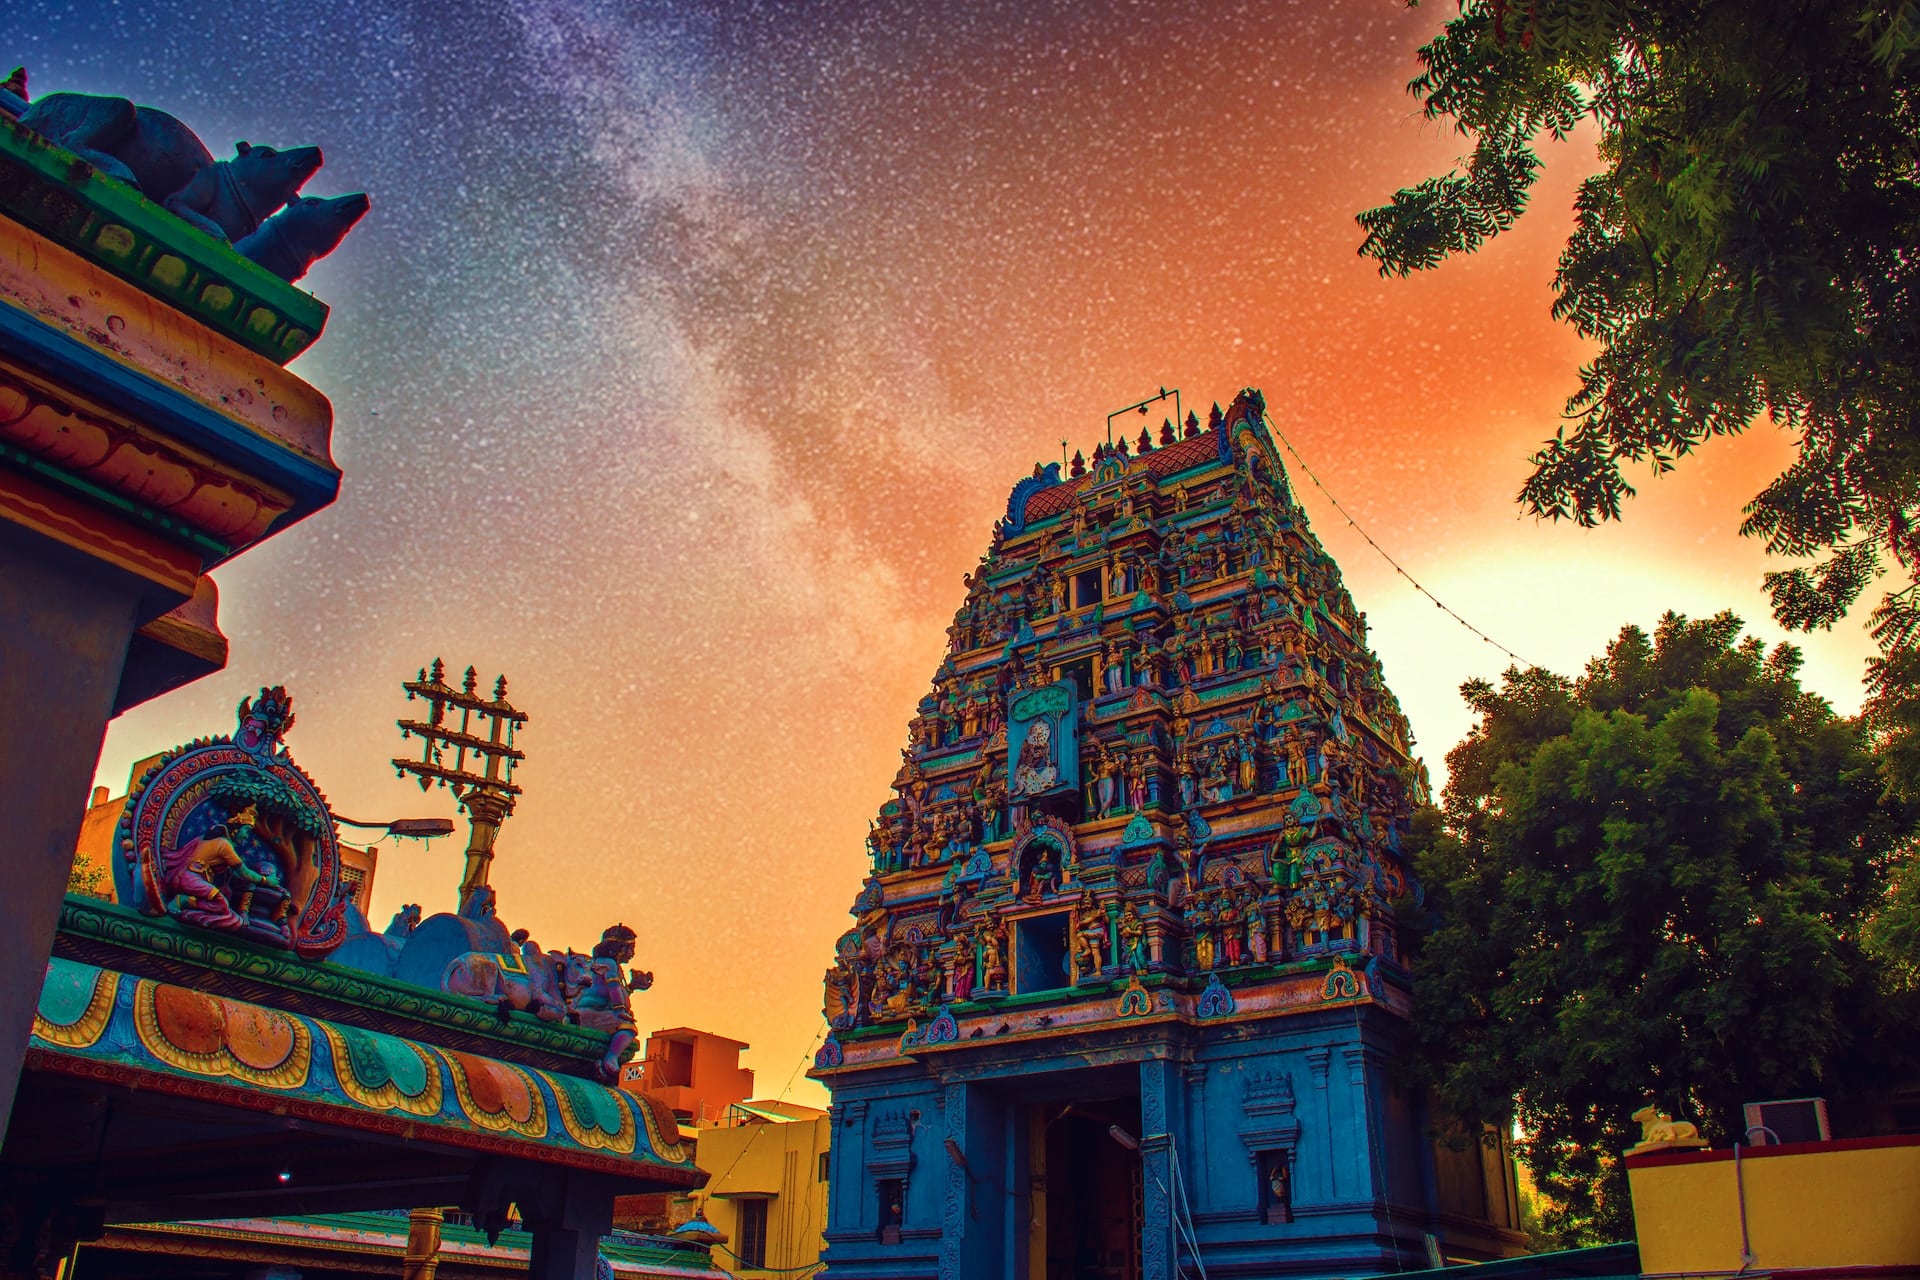 Chennai, Tamil Nadu, India - local architecture